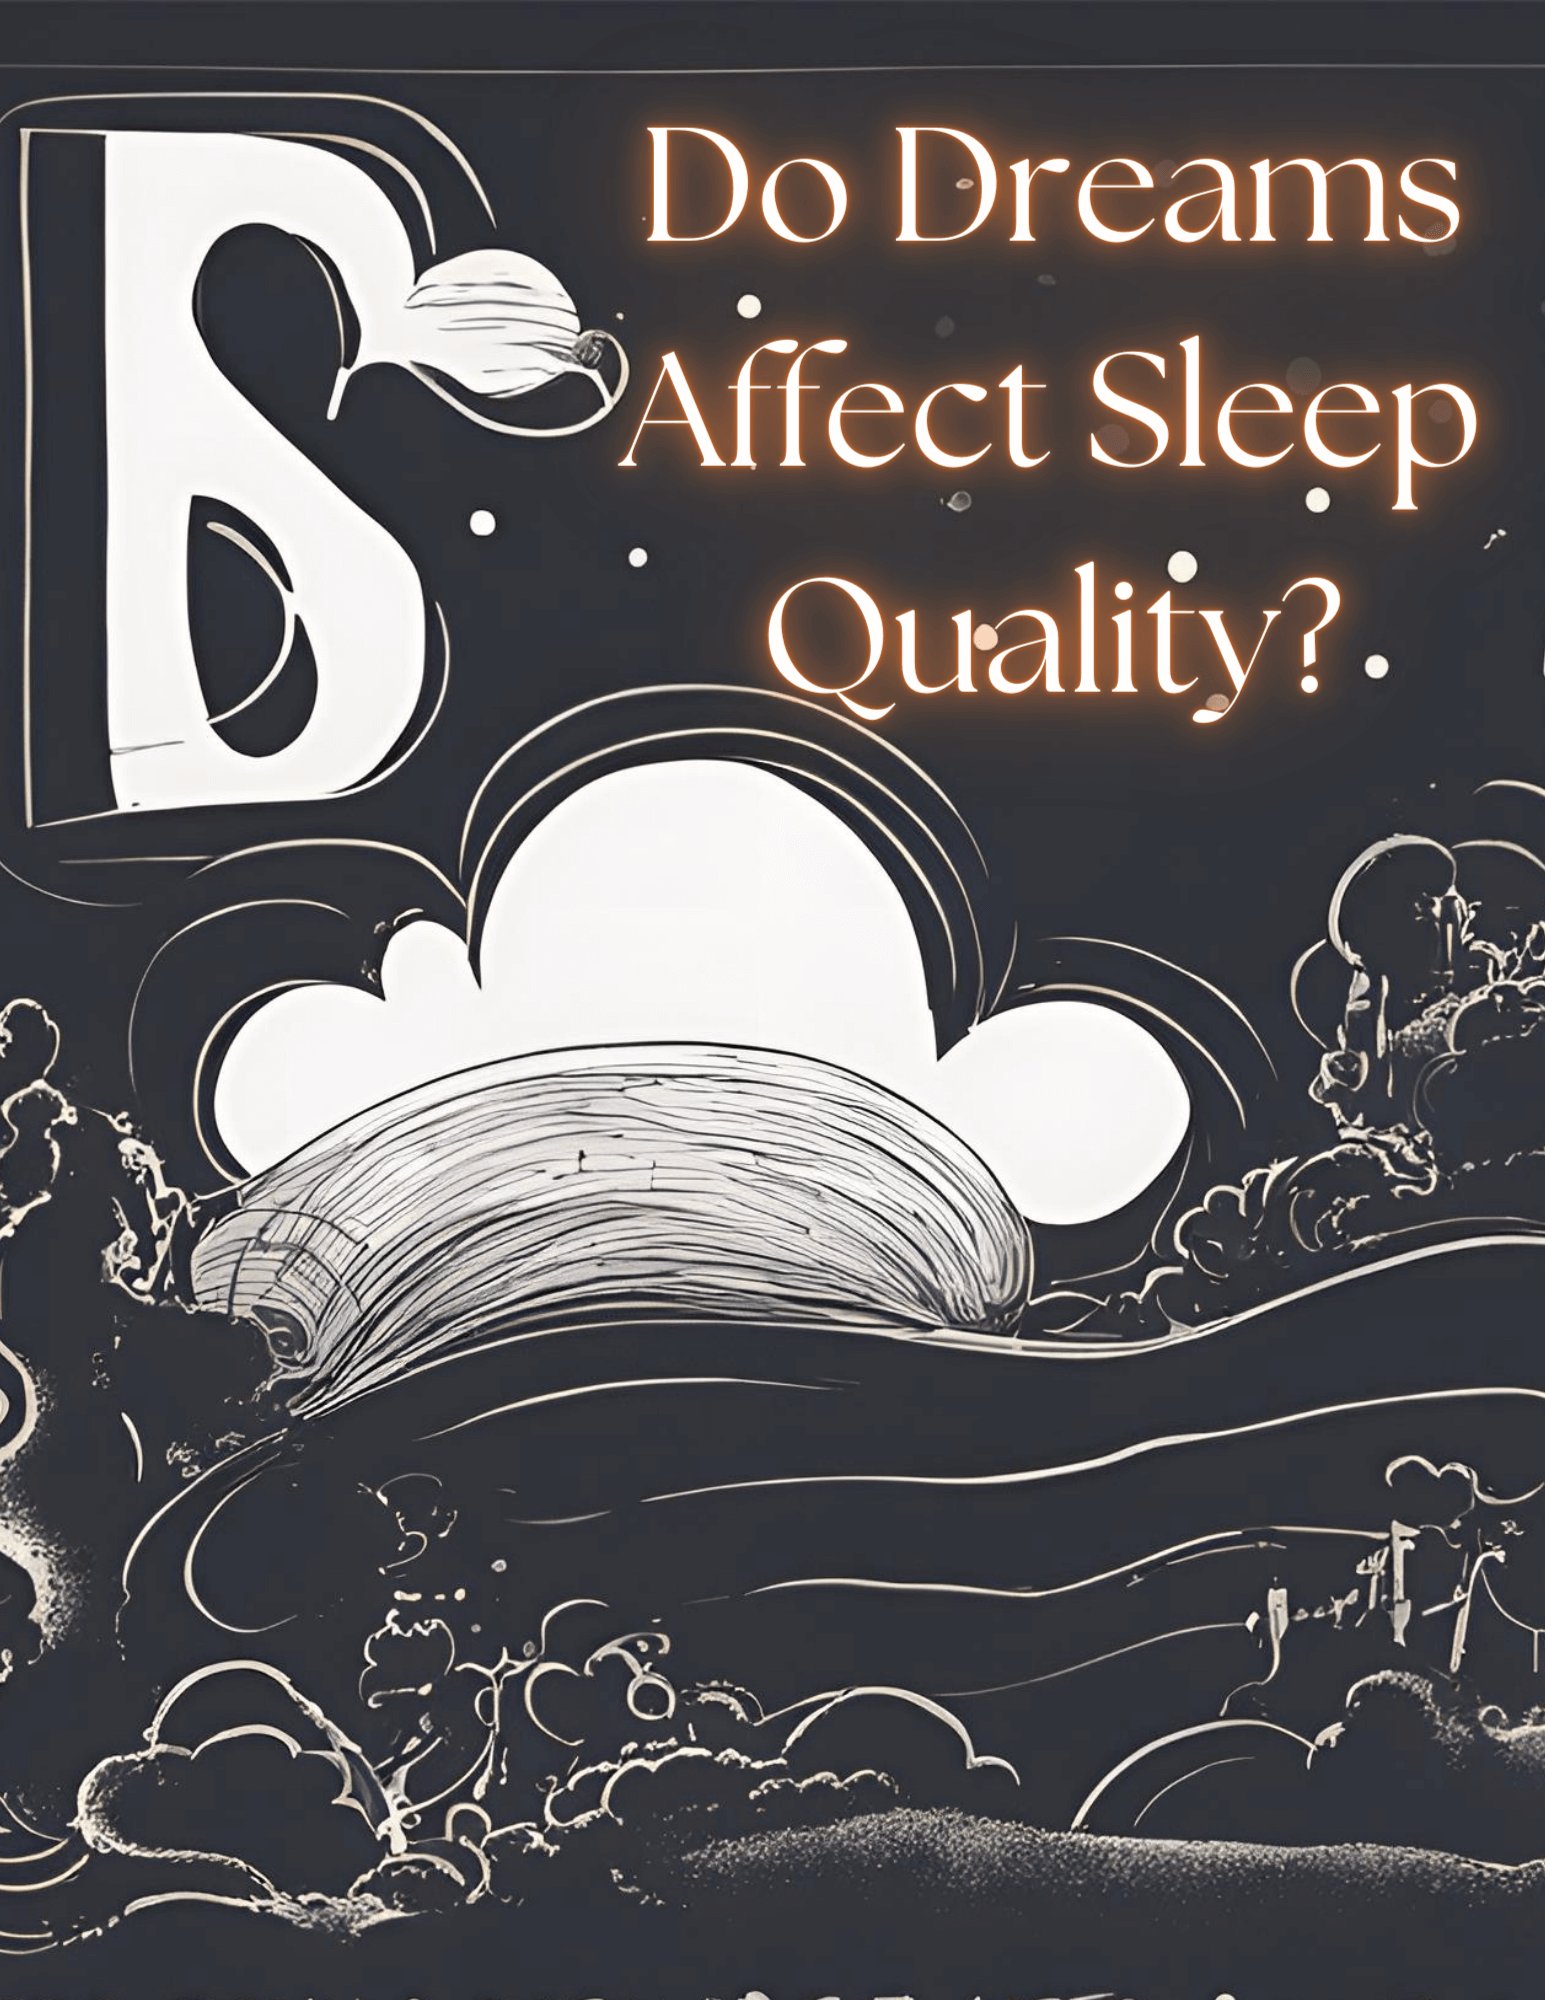 Do Dreams Affect Sleep Quality